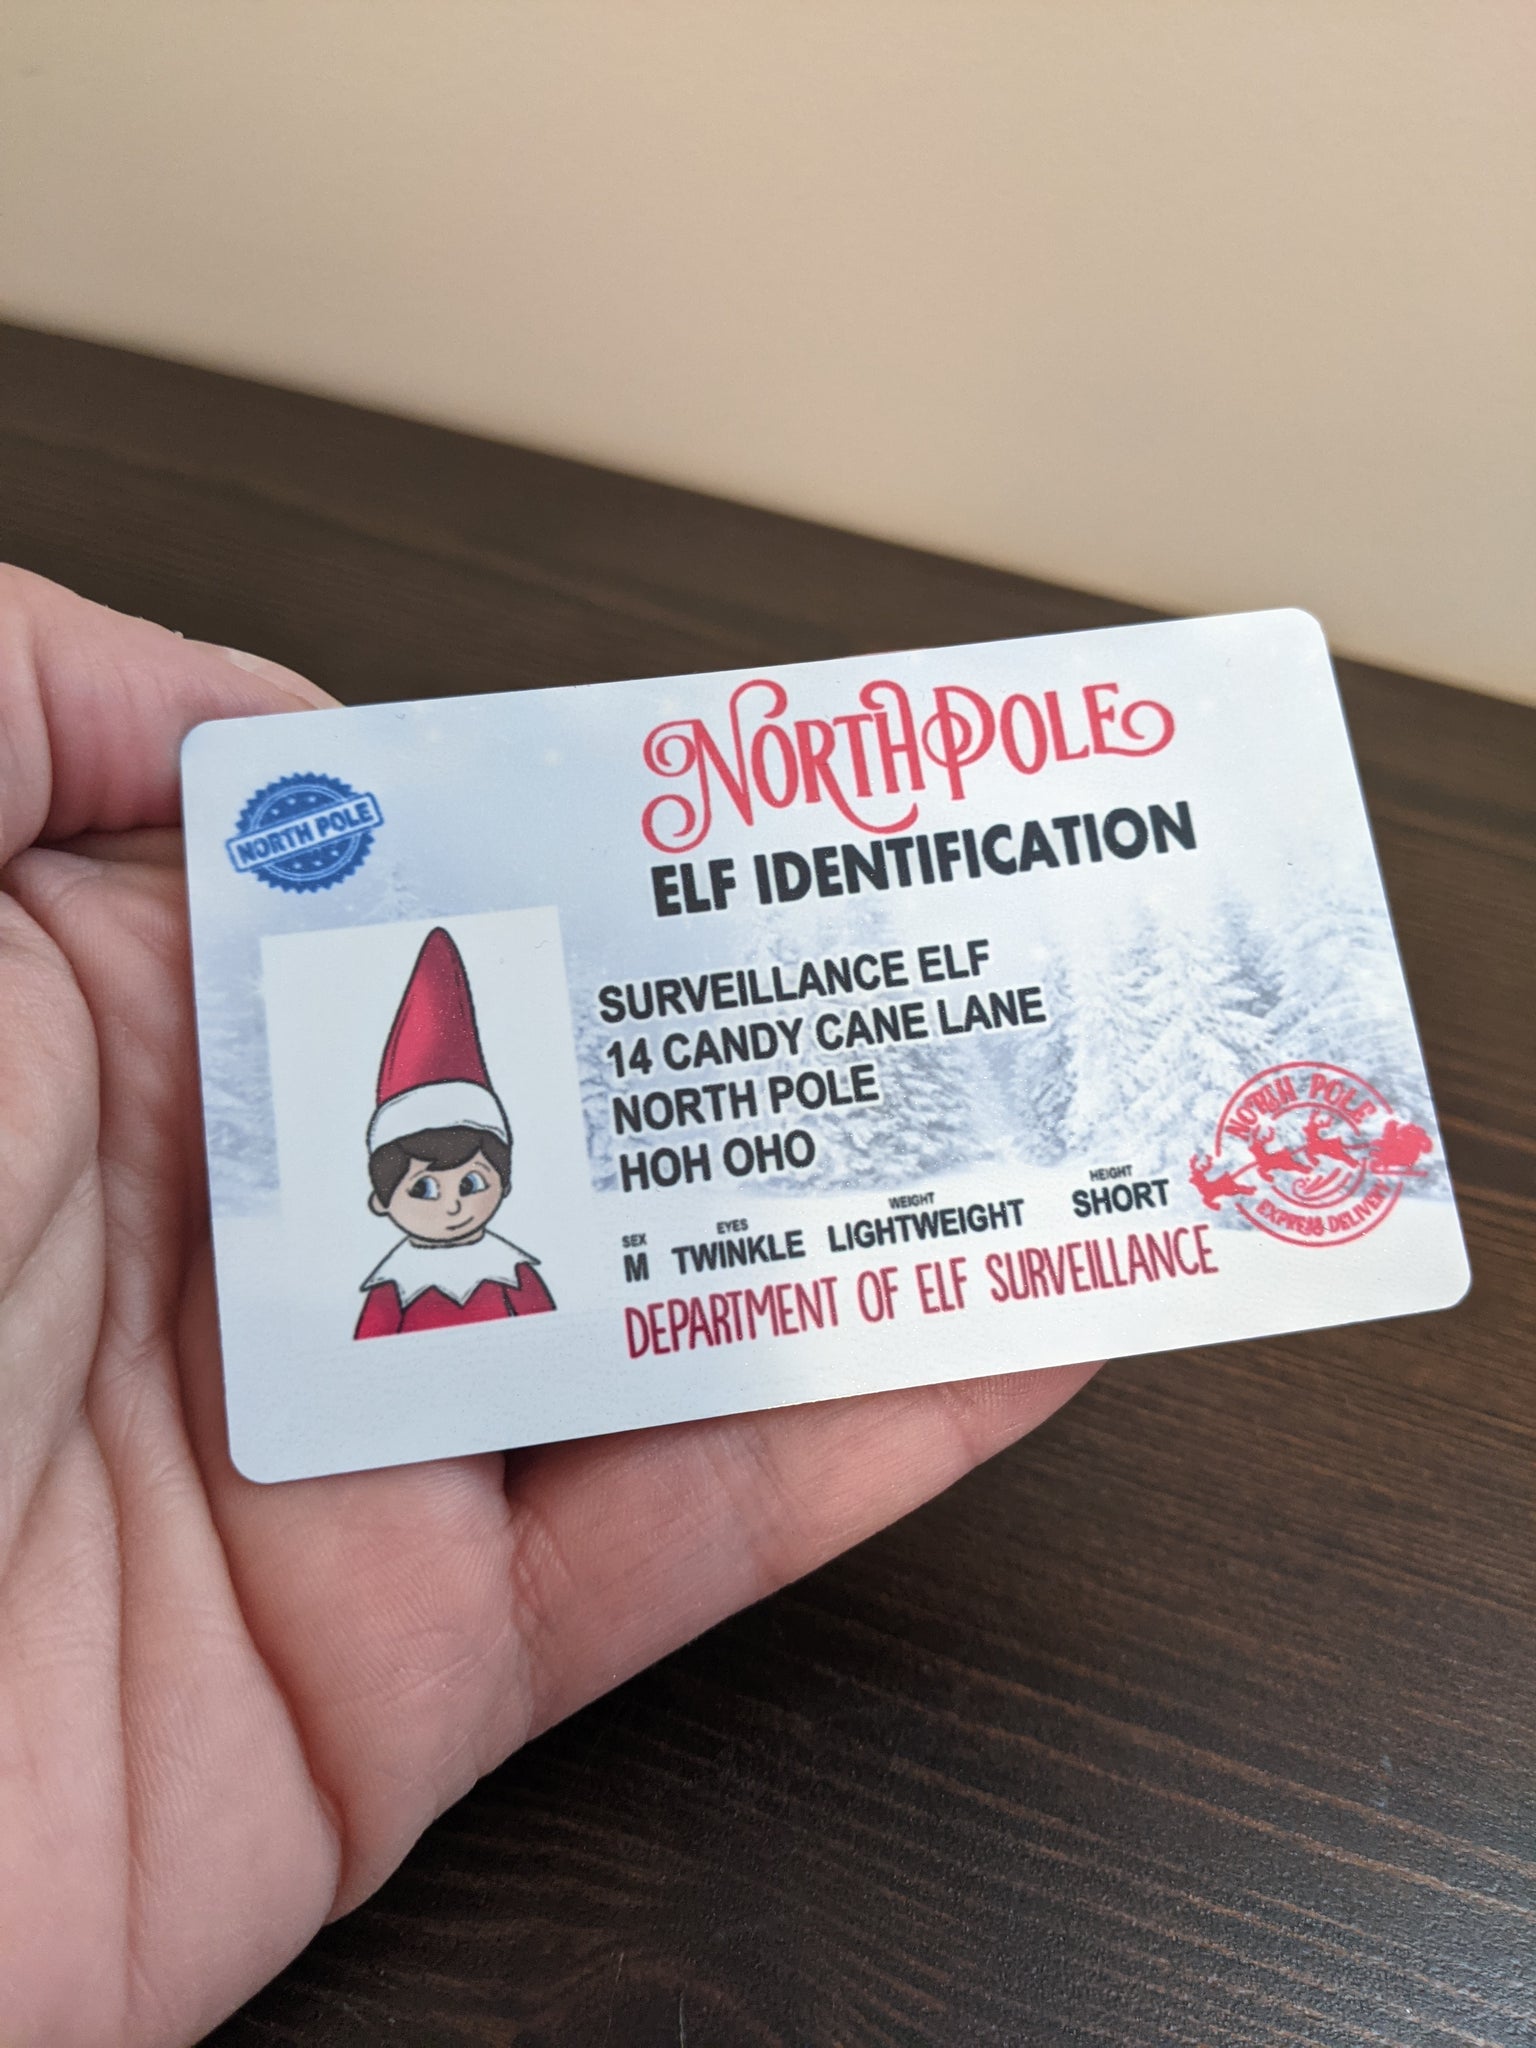 Elf surveillance ID card